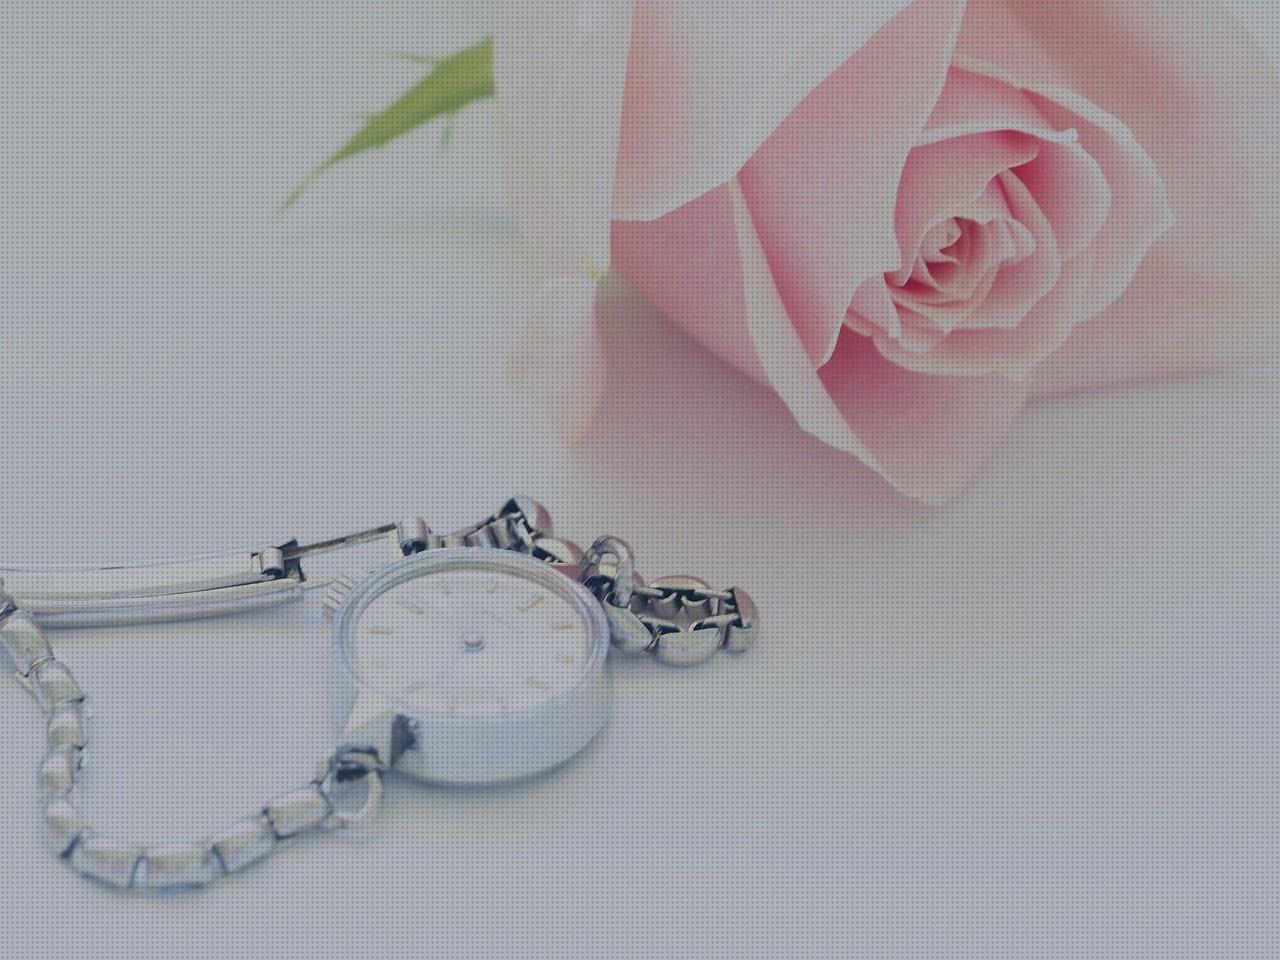 ¿Dónde poder comprar relojes rosas relojes amazon otros colores hb 230 1 34 2718 1148 489 relojes amazon pared relojes rosa mujer marea?